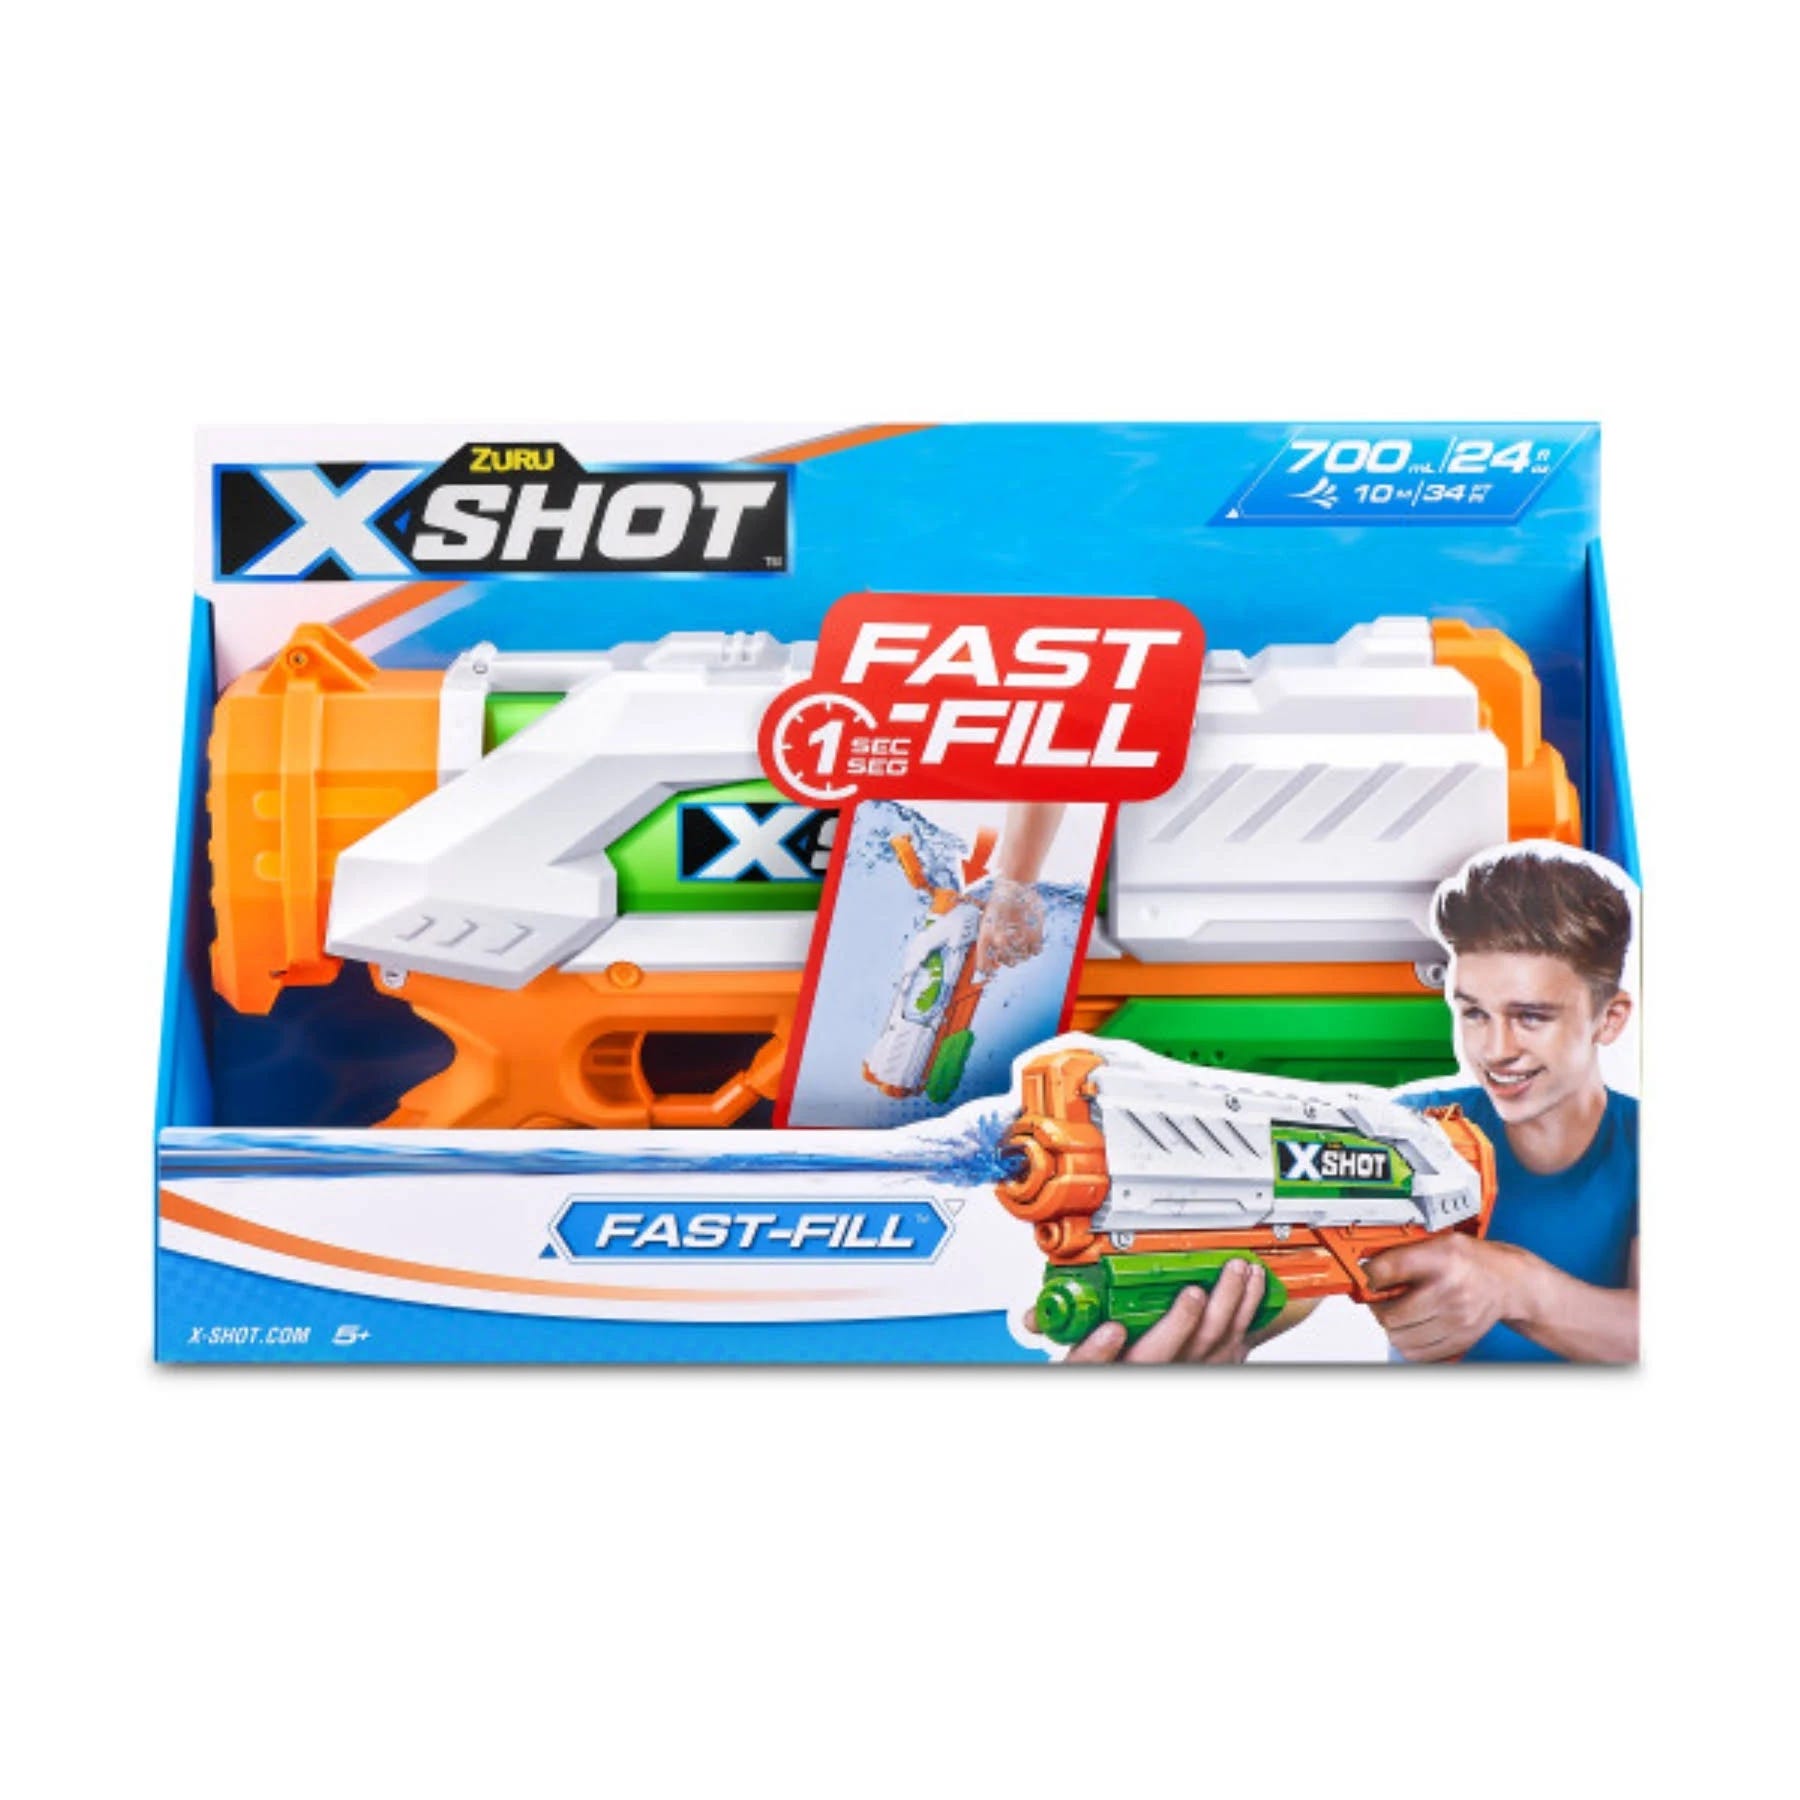 X-Shot Fast-Fill Water Blaster: Lightning Refill and Long-Range Shots | Image